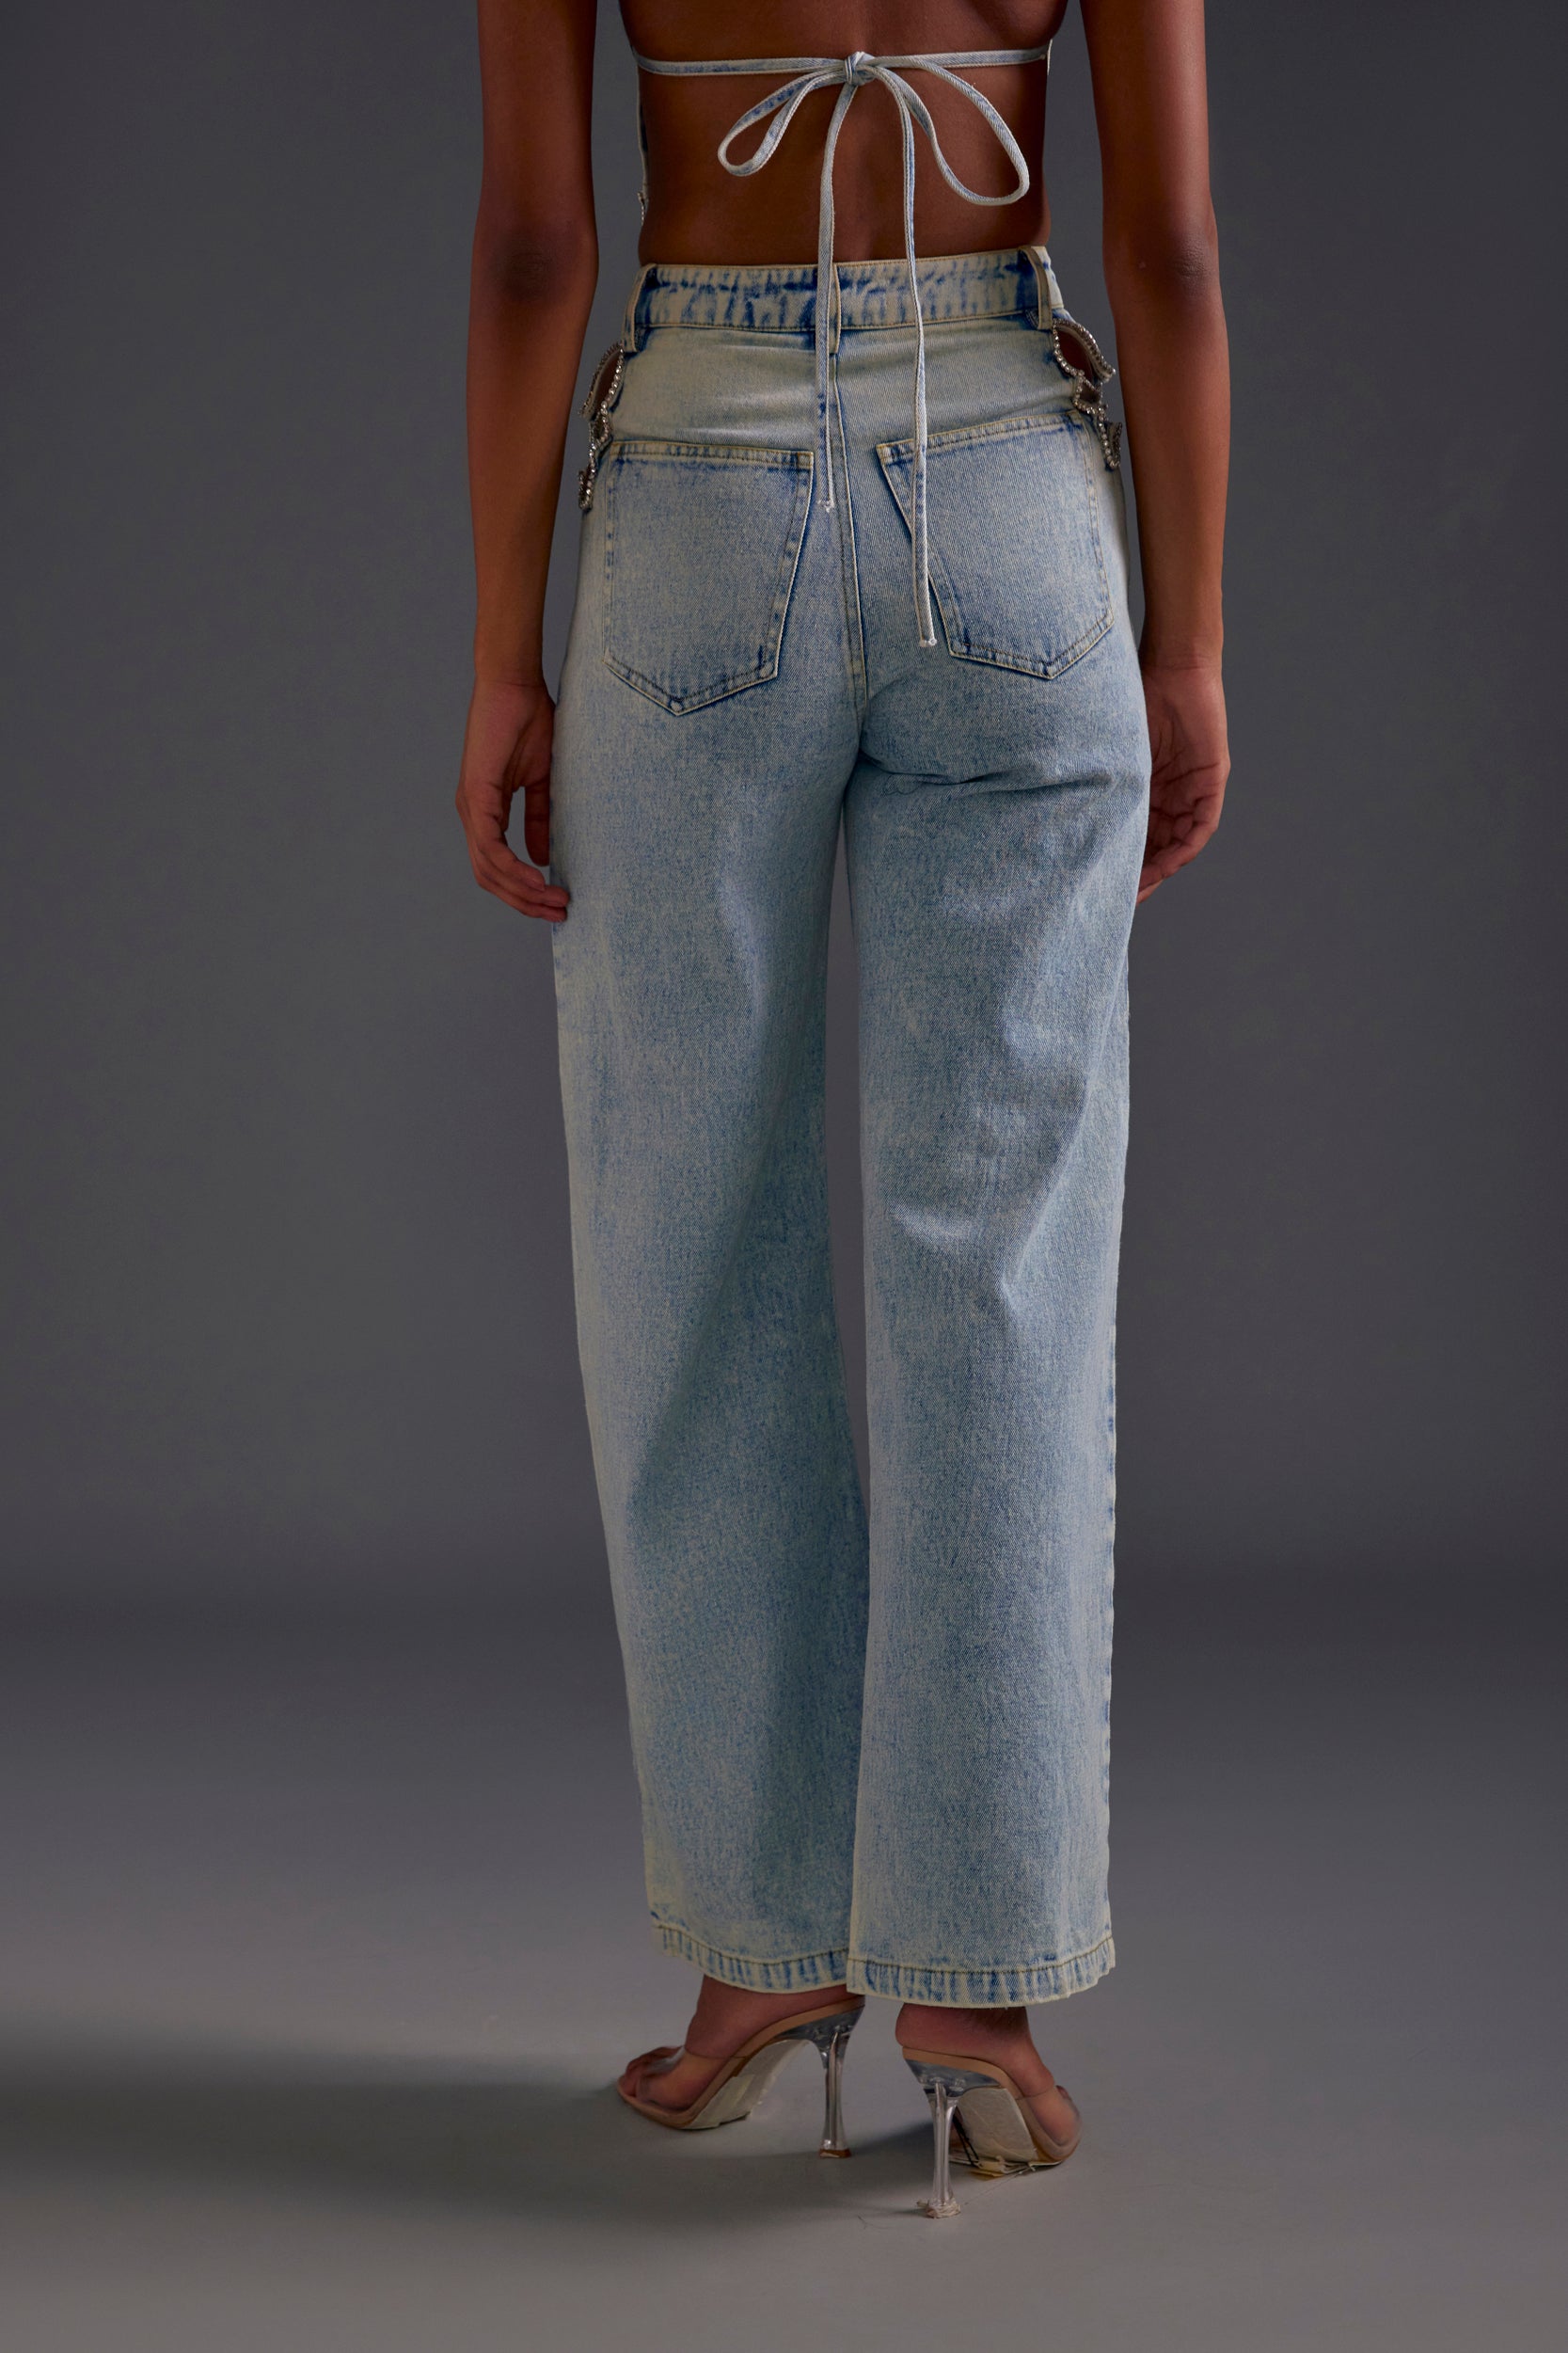 Rhinestone Embellished Cutout Jeans